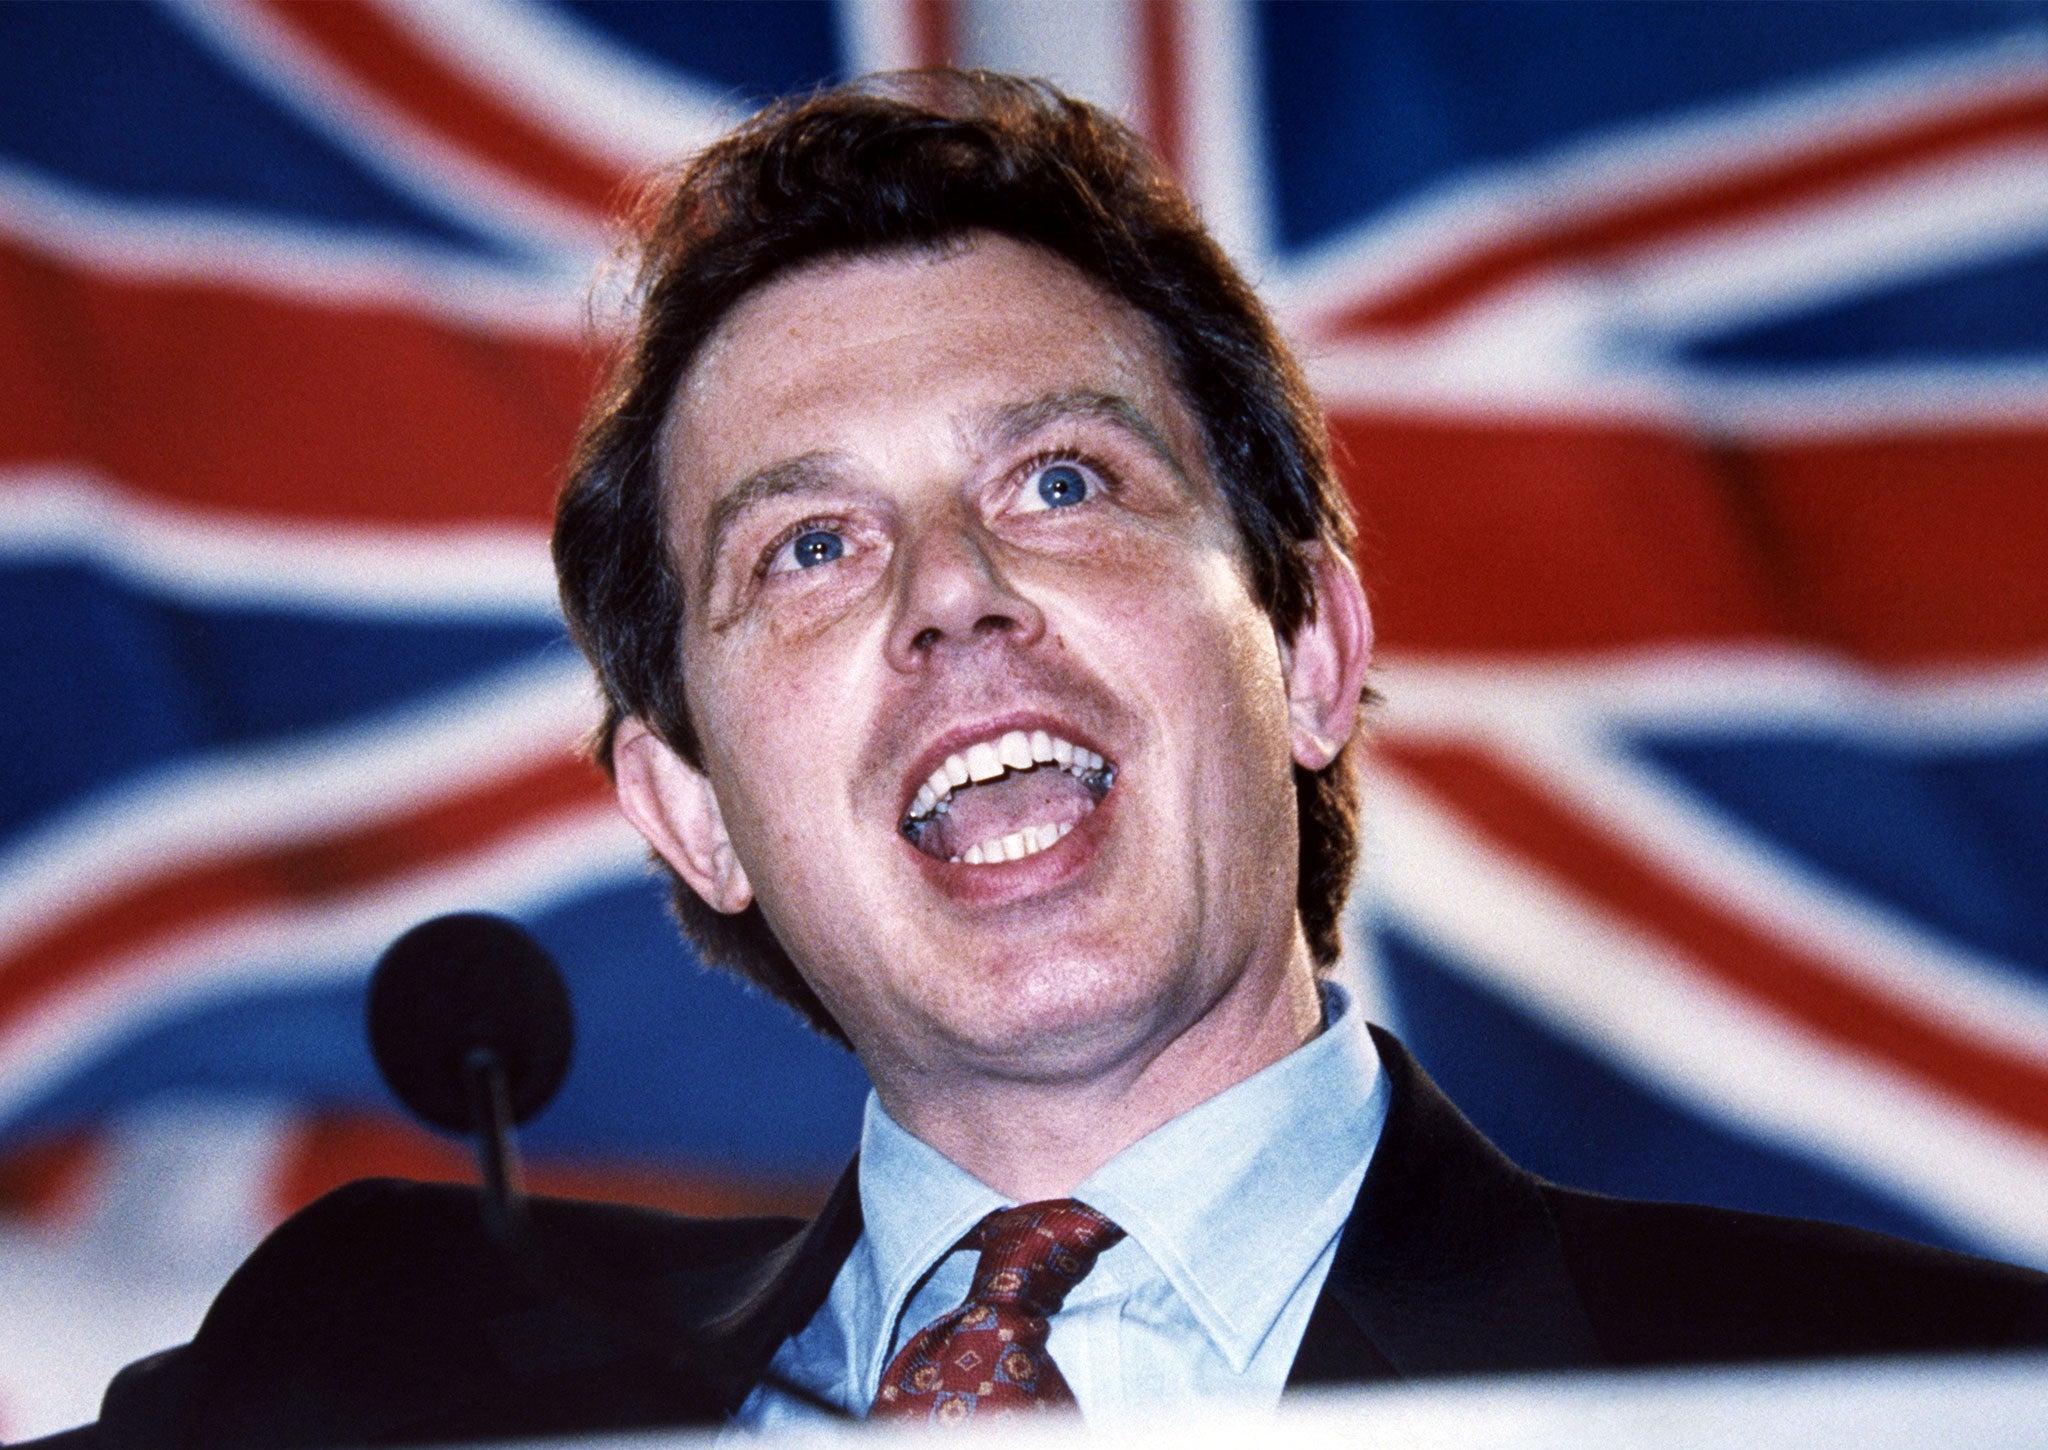 Tony Blair gives a speech in 1996